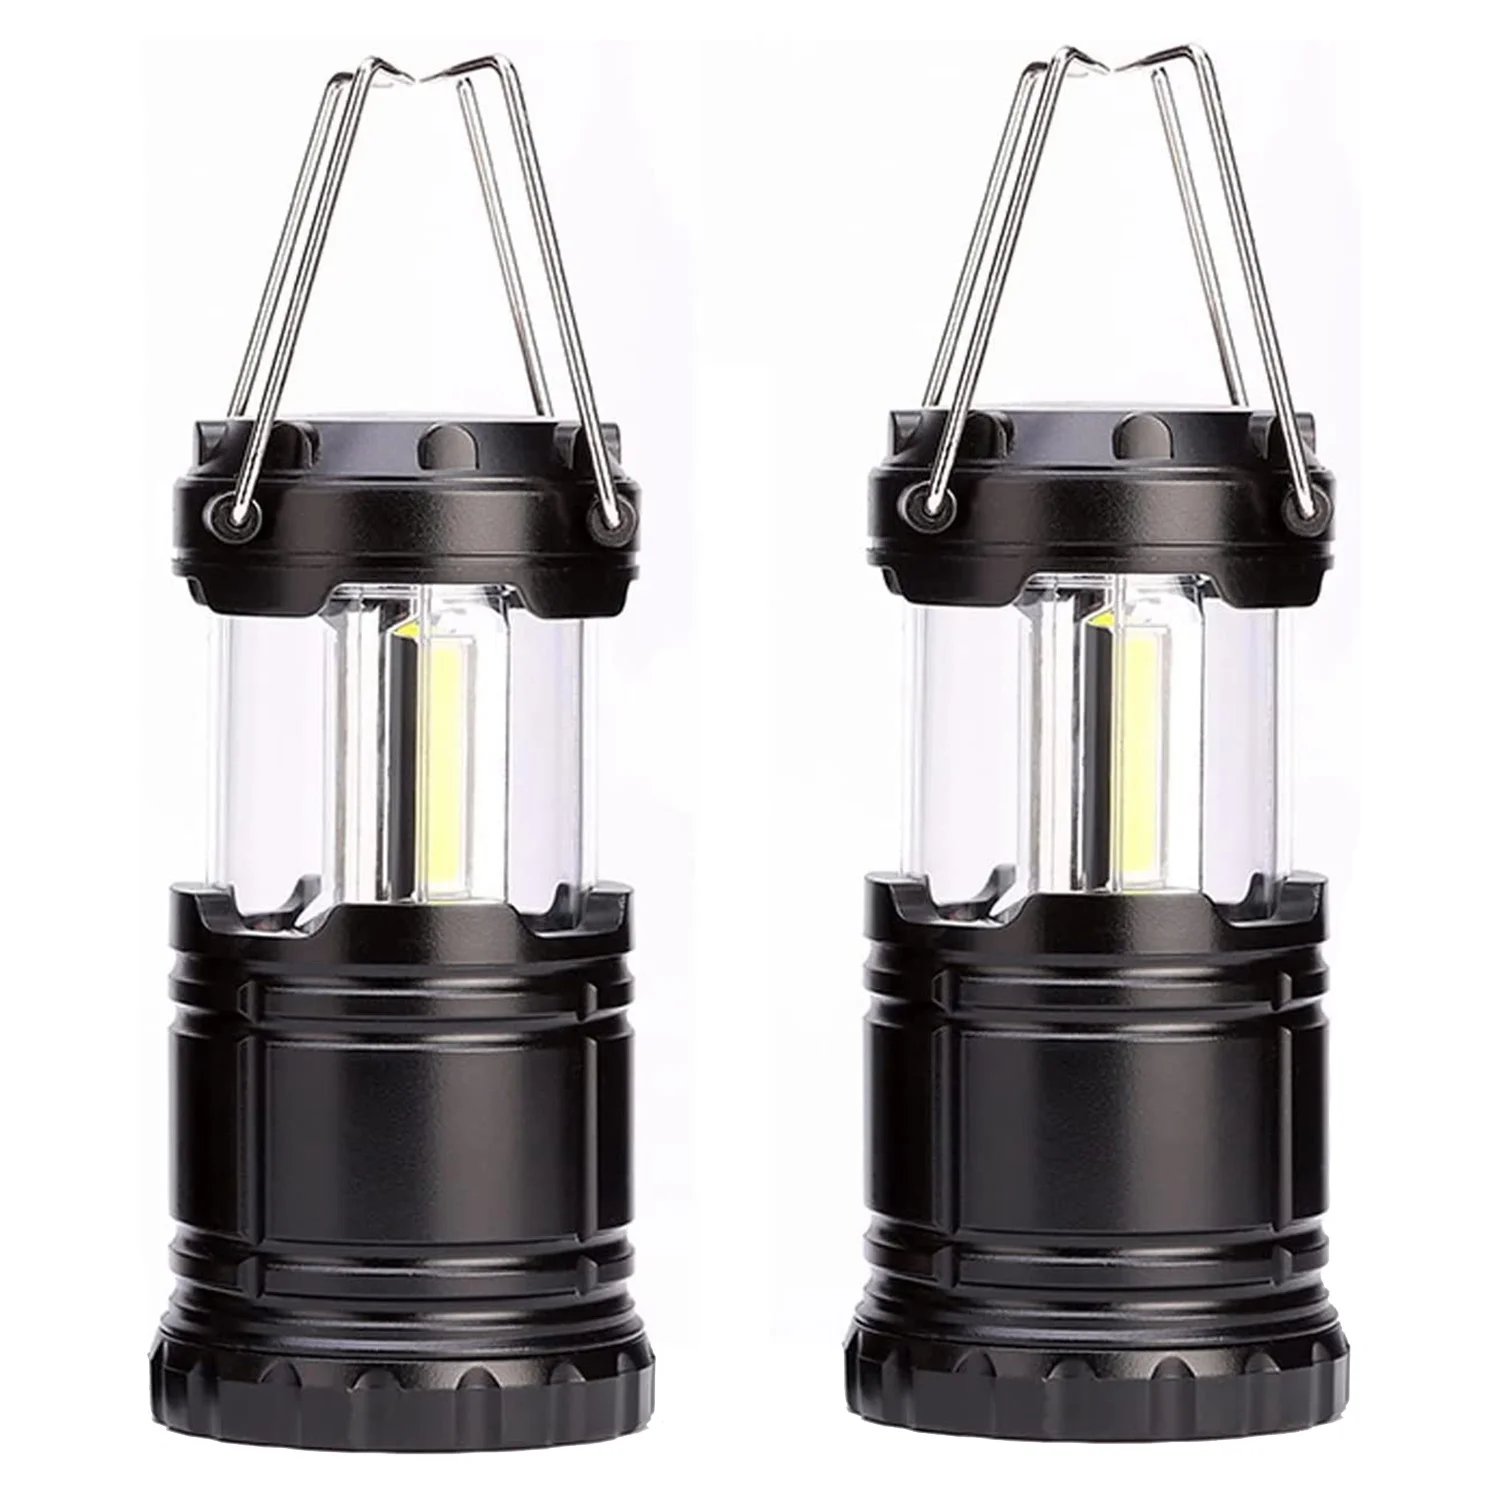 Переносная походная лампа COB со складной водонепроницаемой лампой, лампа на батарейках, Переносная походная лампа